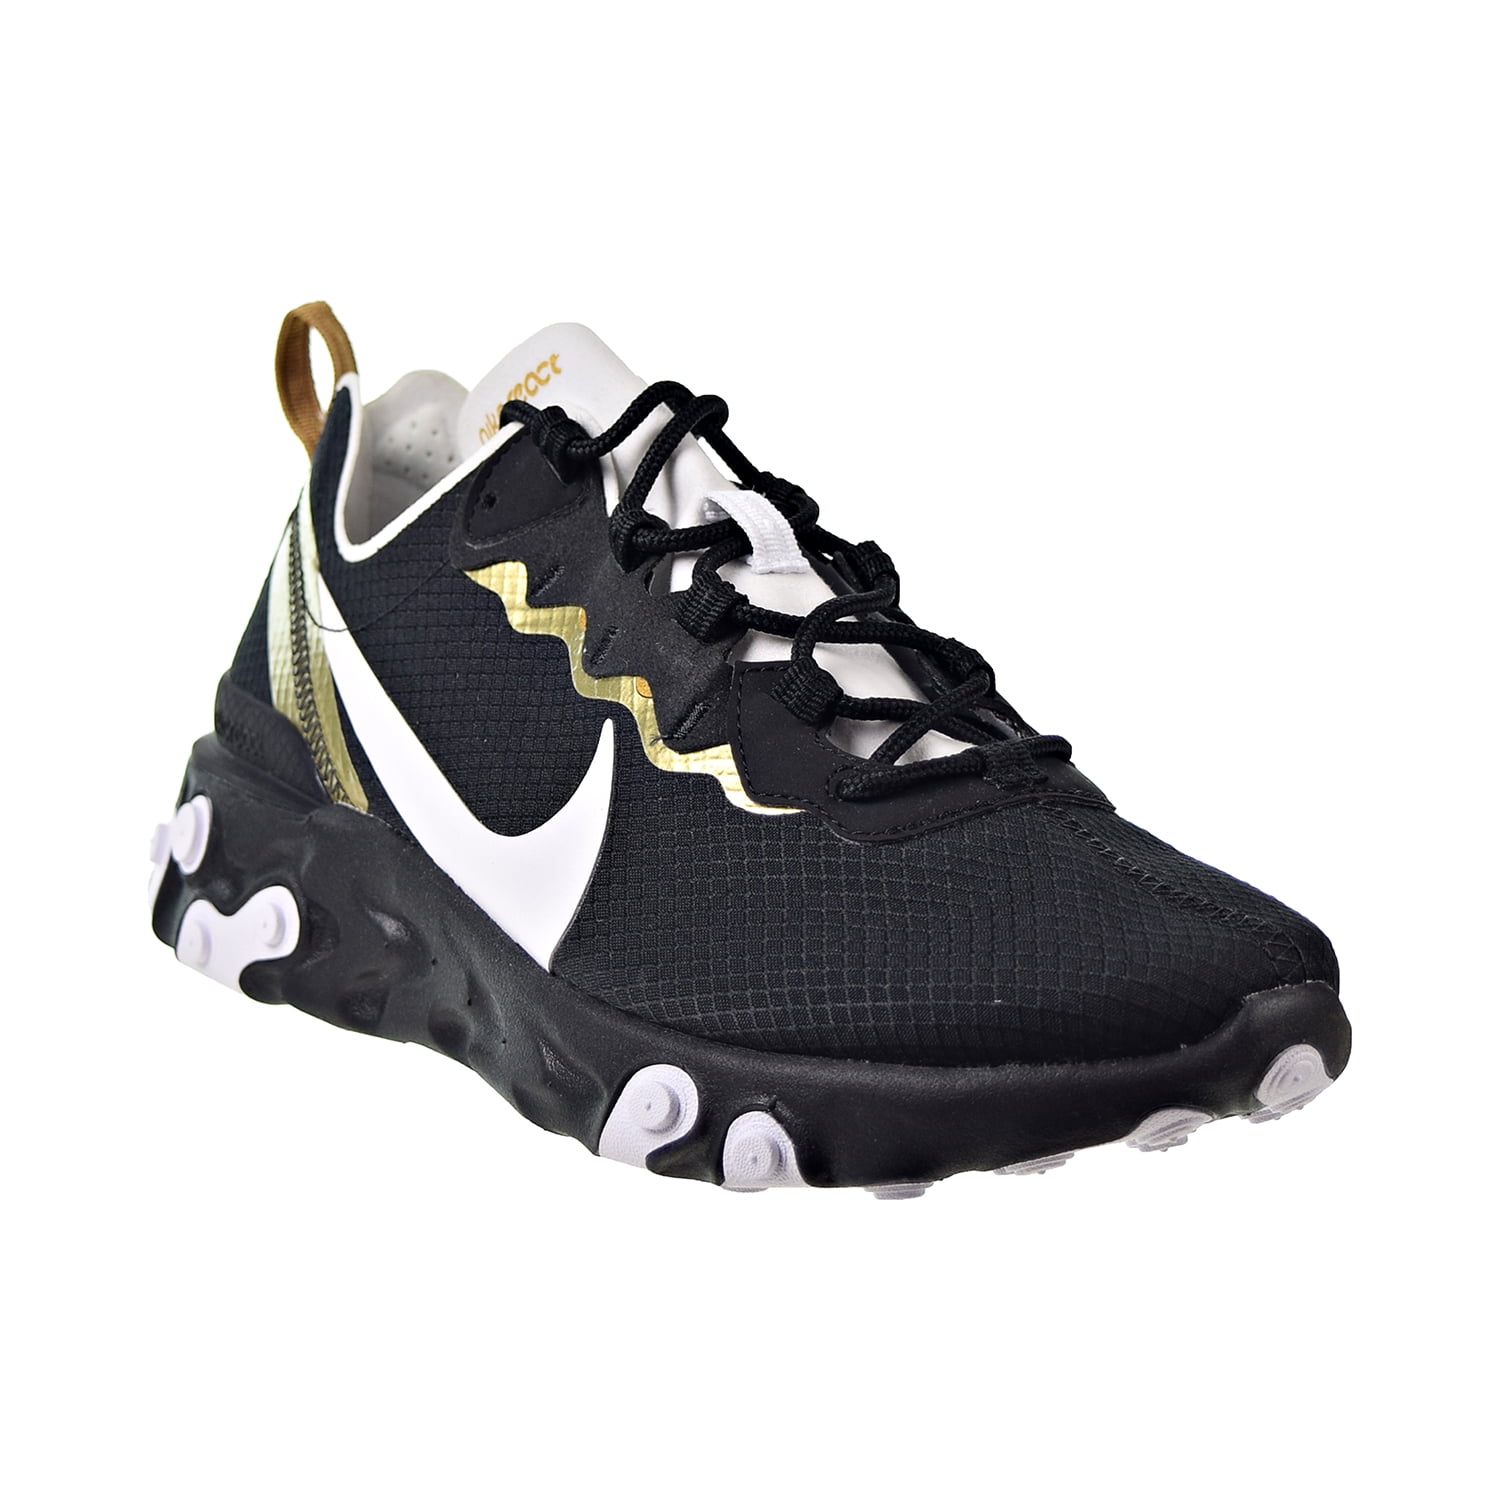 Consulta Extracto Residuos Nike React Element Men's Shoes Black-White-Metallic Gold ct1590-001 -  Walmart.com